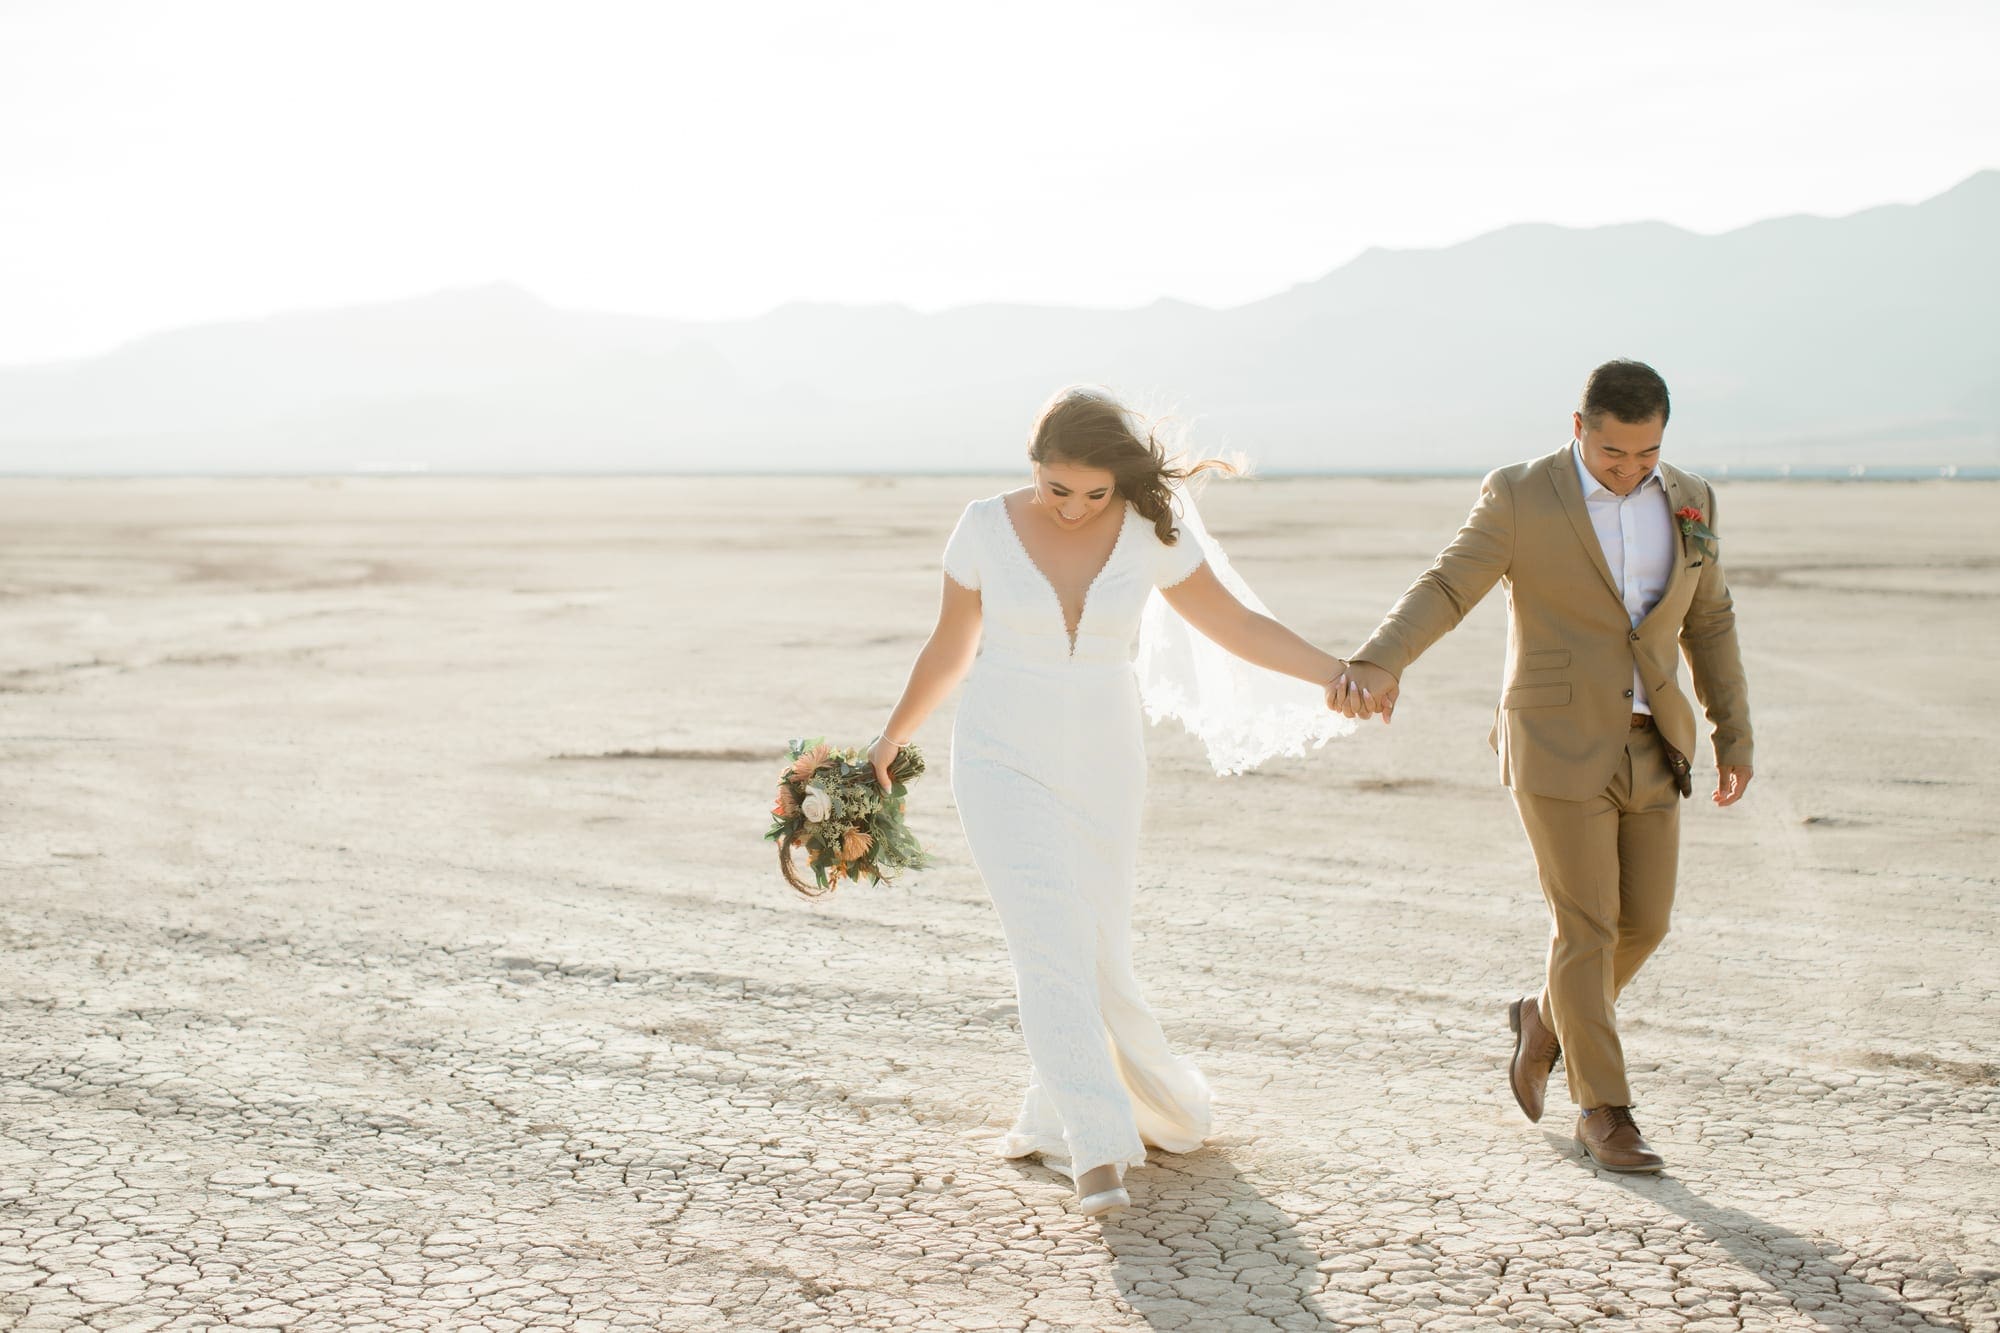 Kerrigan + Trevor: A Real Wedding at Dry Lake Bed